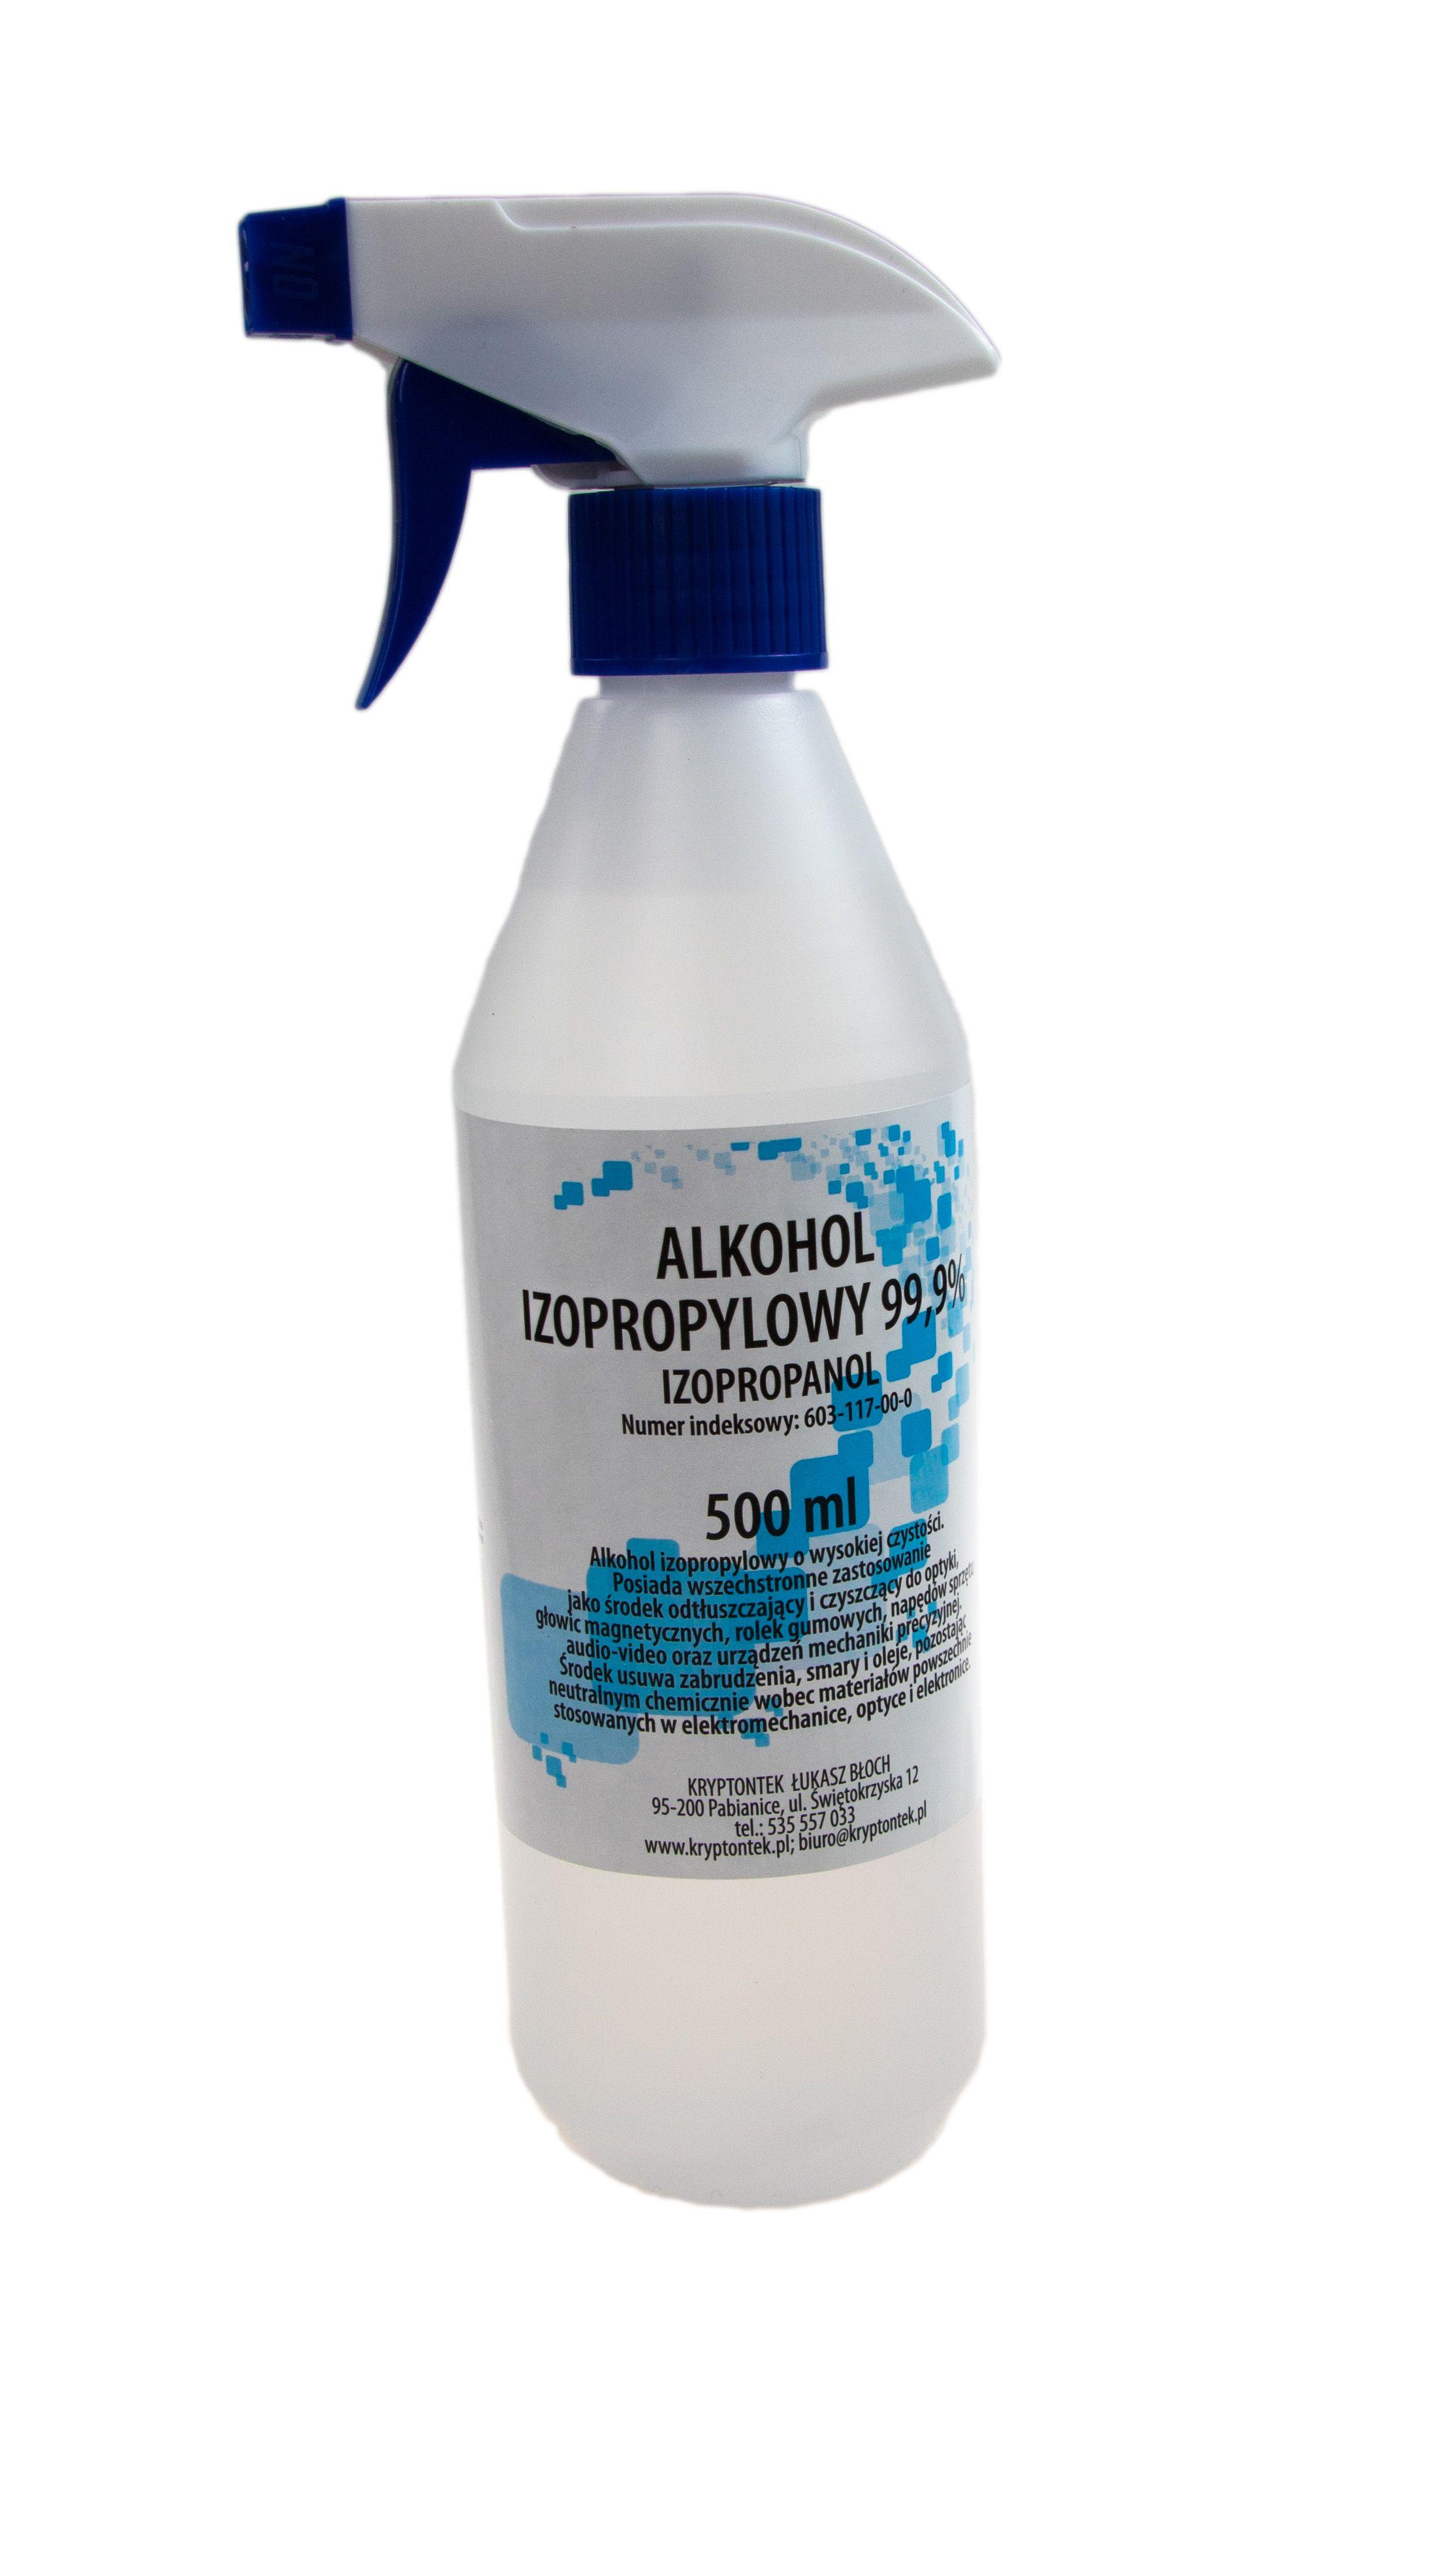 Isopropyl alcohol 99.9% 500ml with sprayer